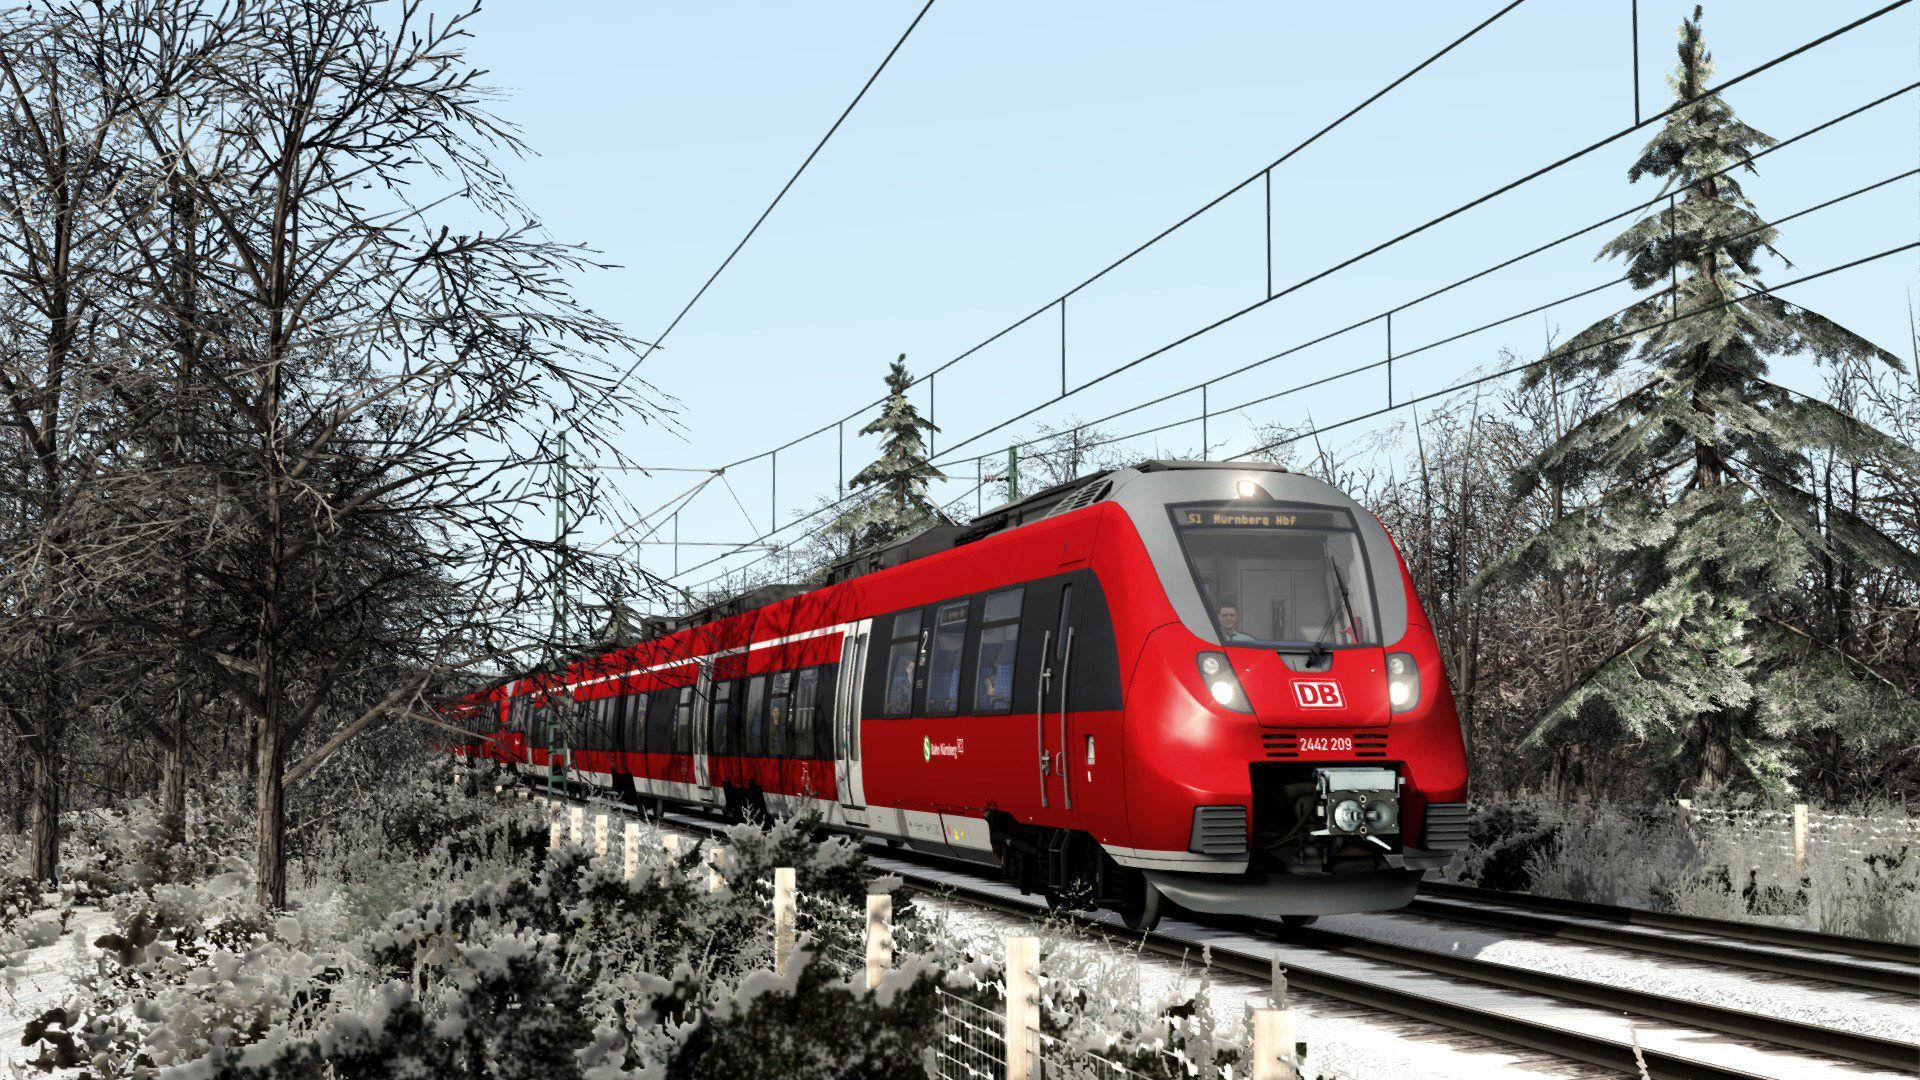 Train Simulator 2020 2